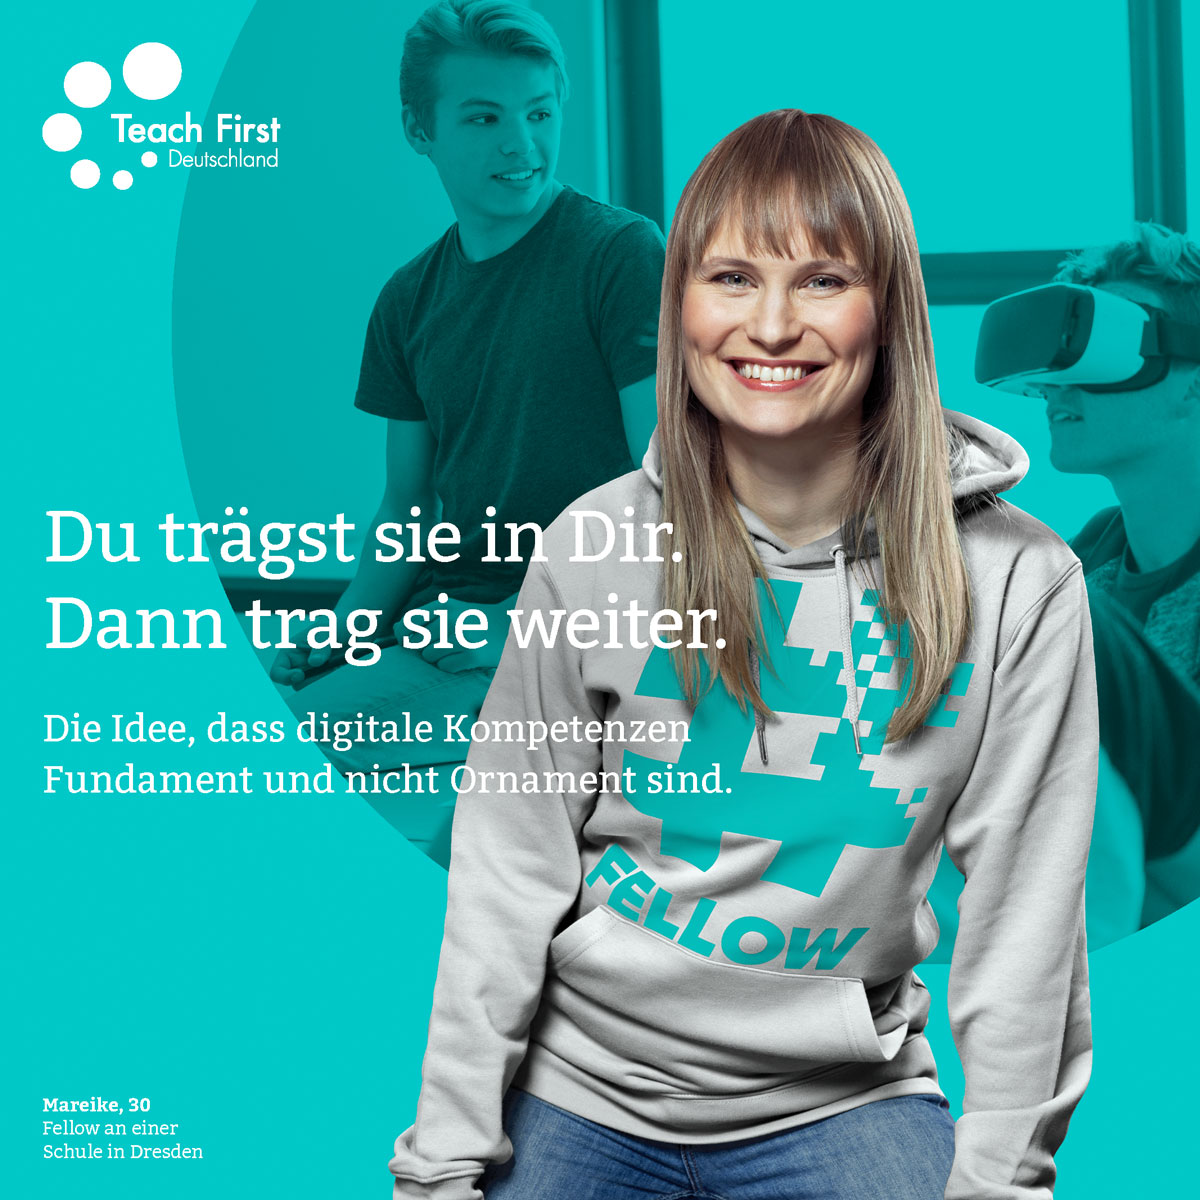 Teach First Deutschland | Recruiting 2021